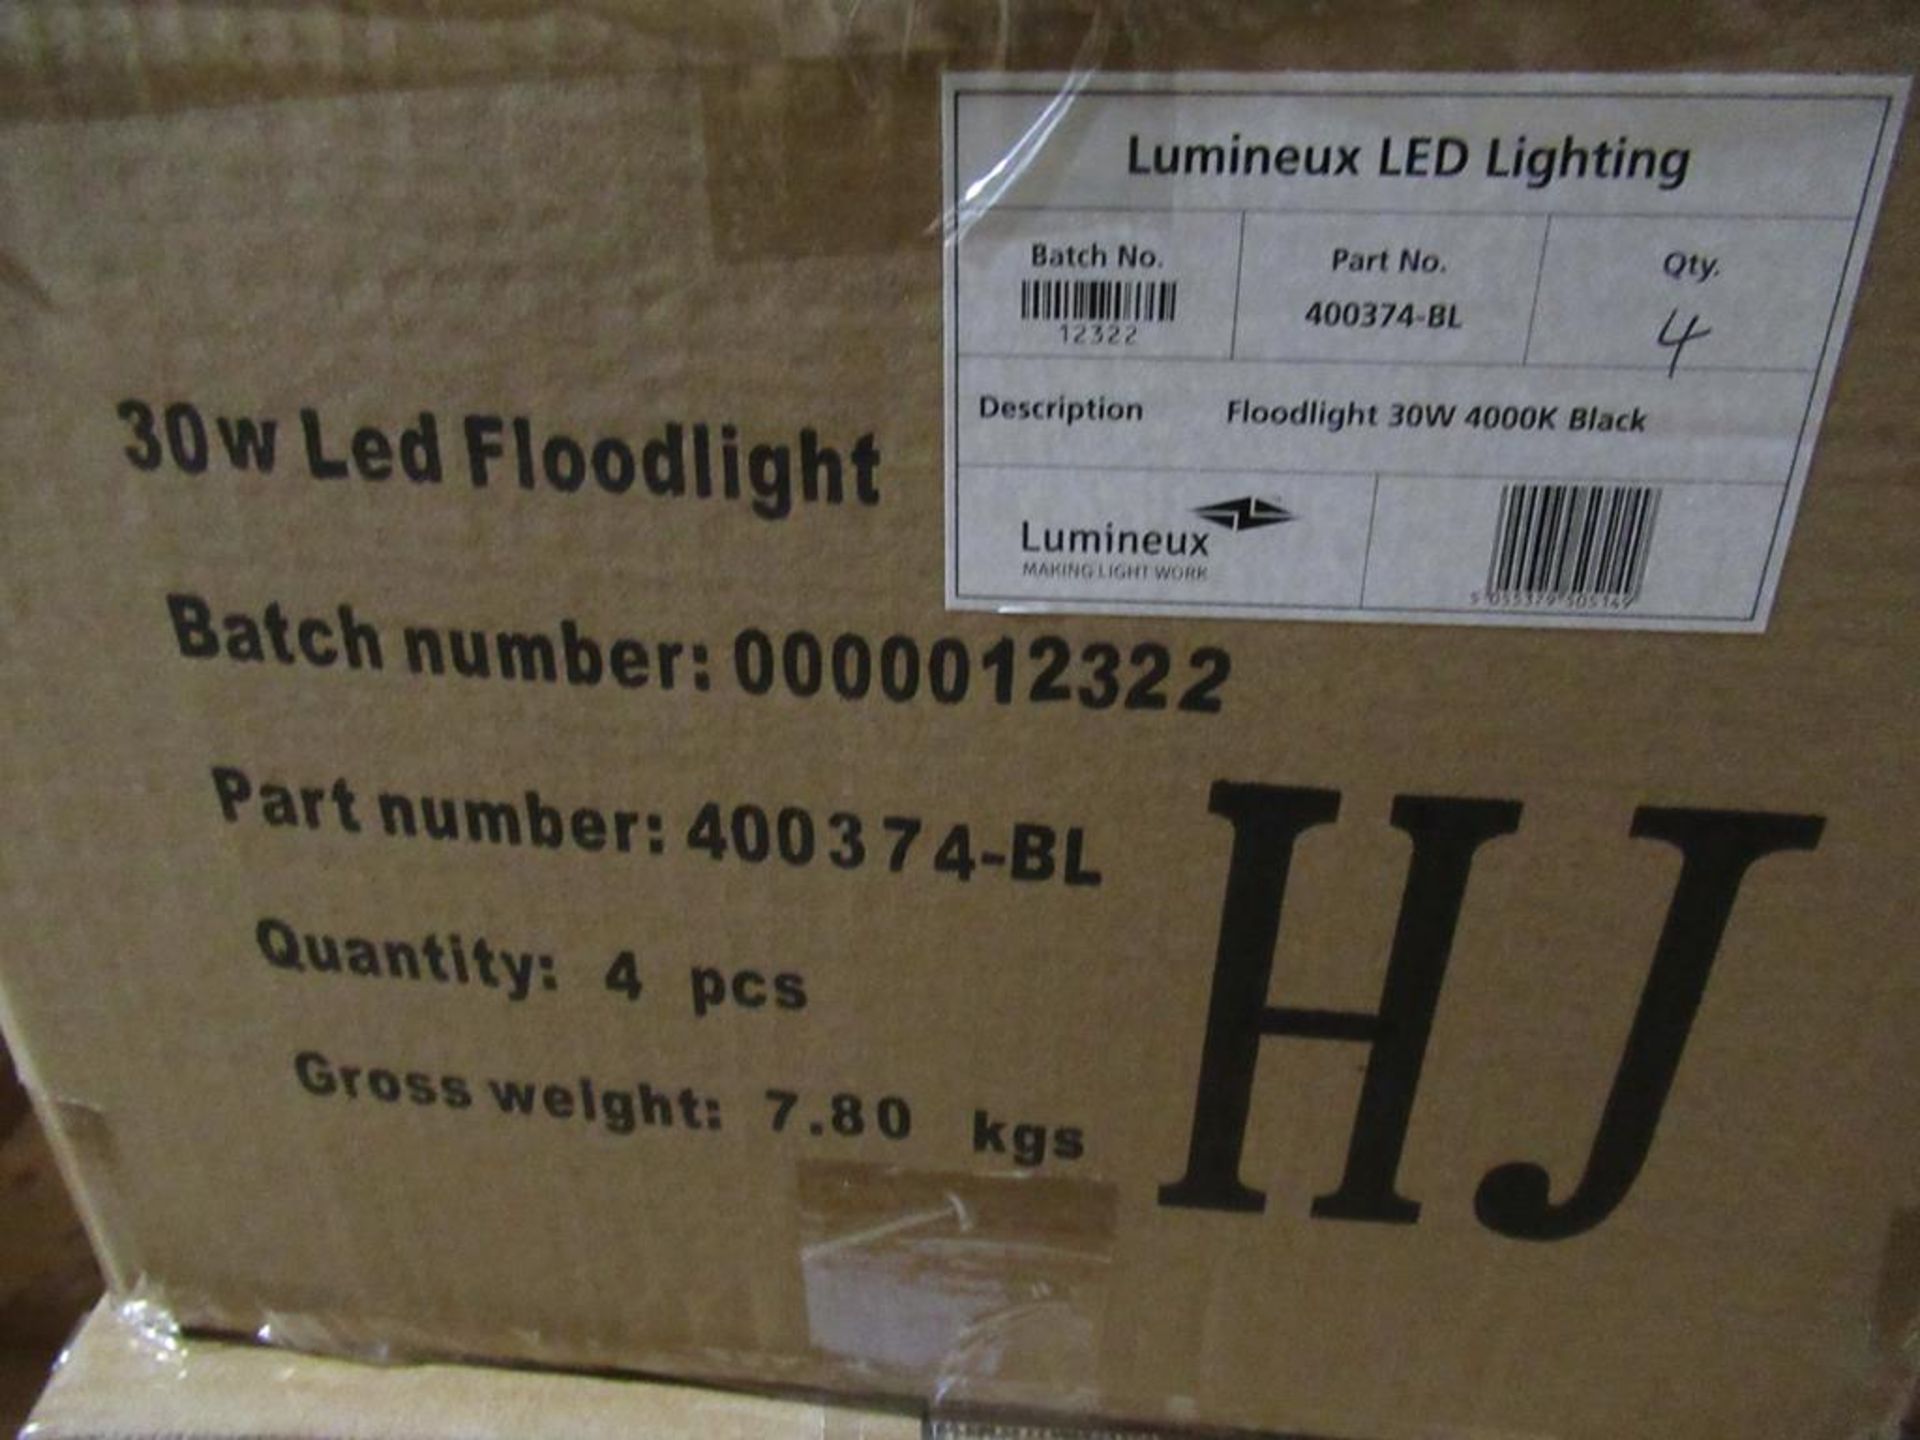 12 x LED 30W Classic Floodlight 4000K OEM Trade Price £ 504 - Image 2 of 3